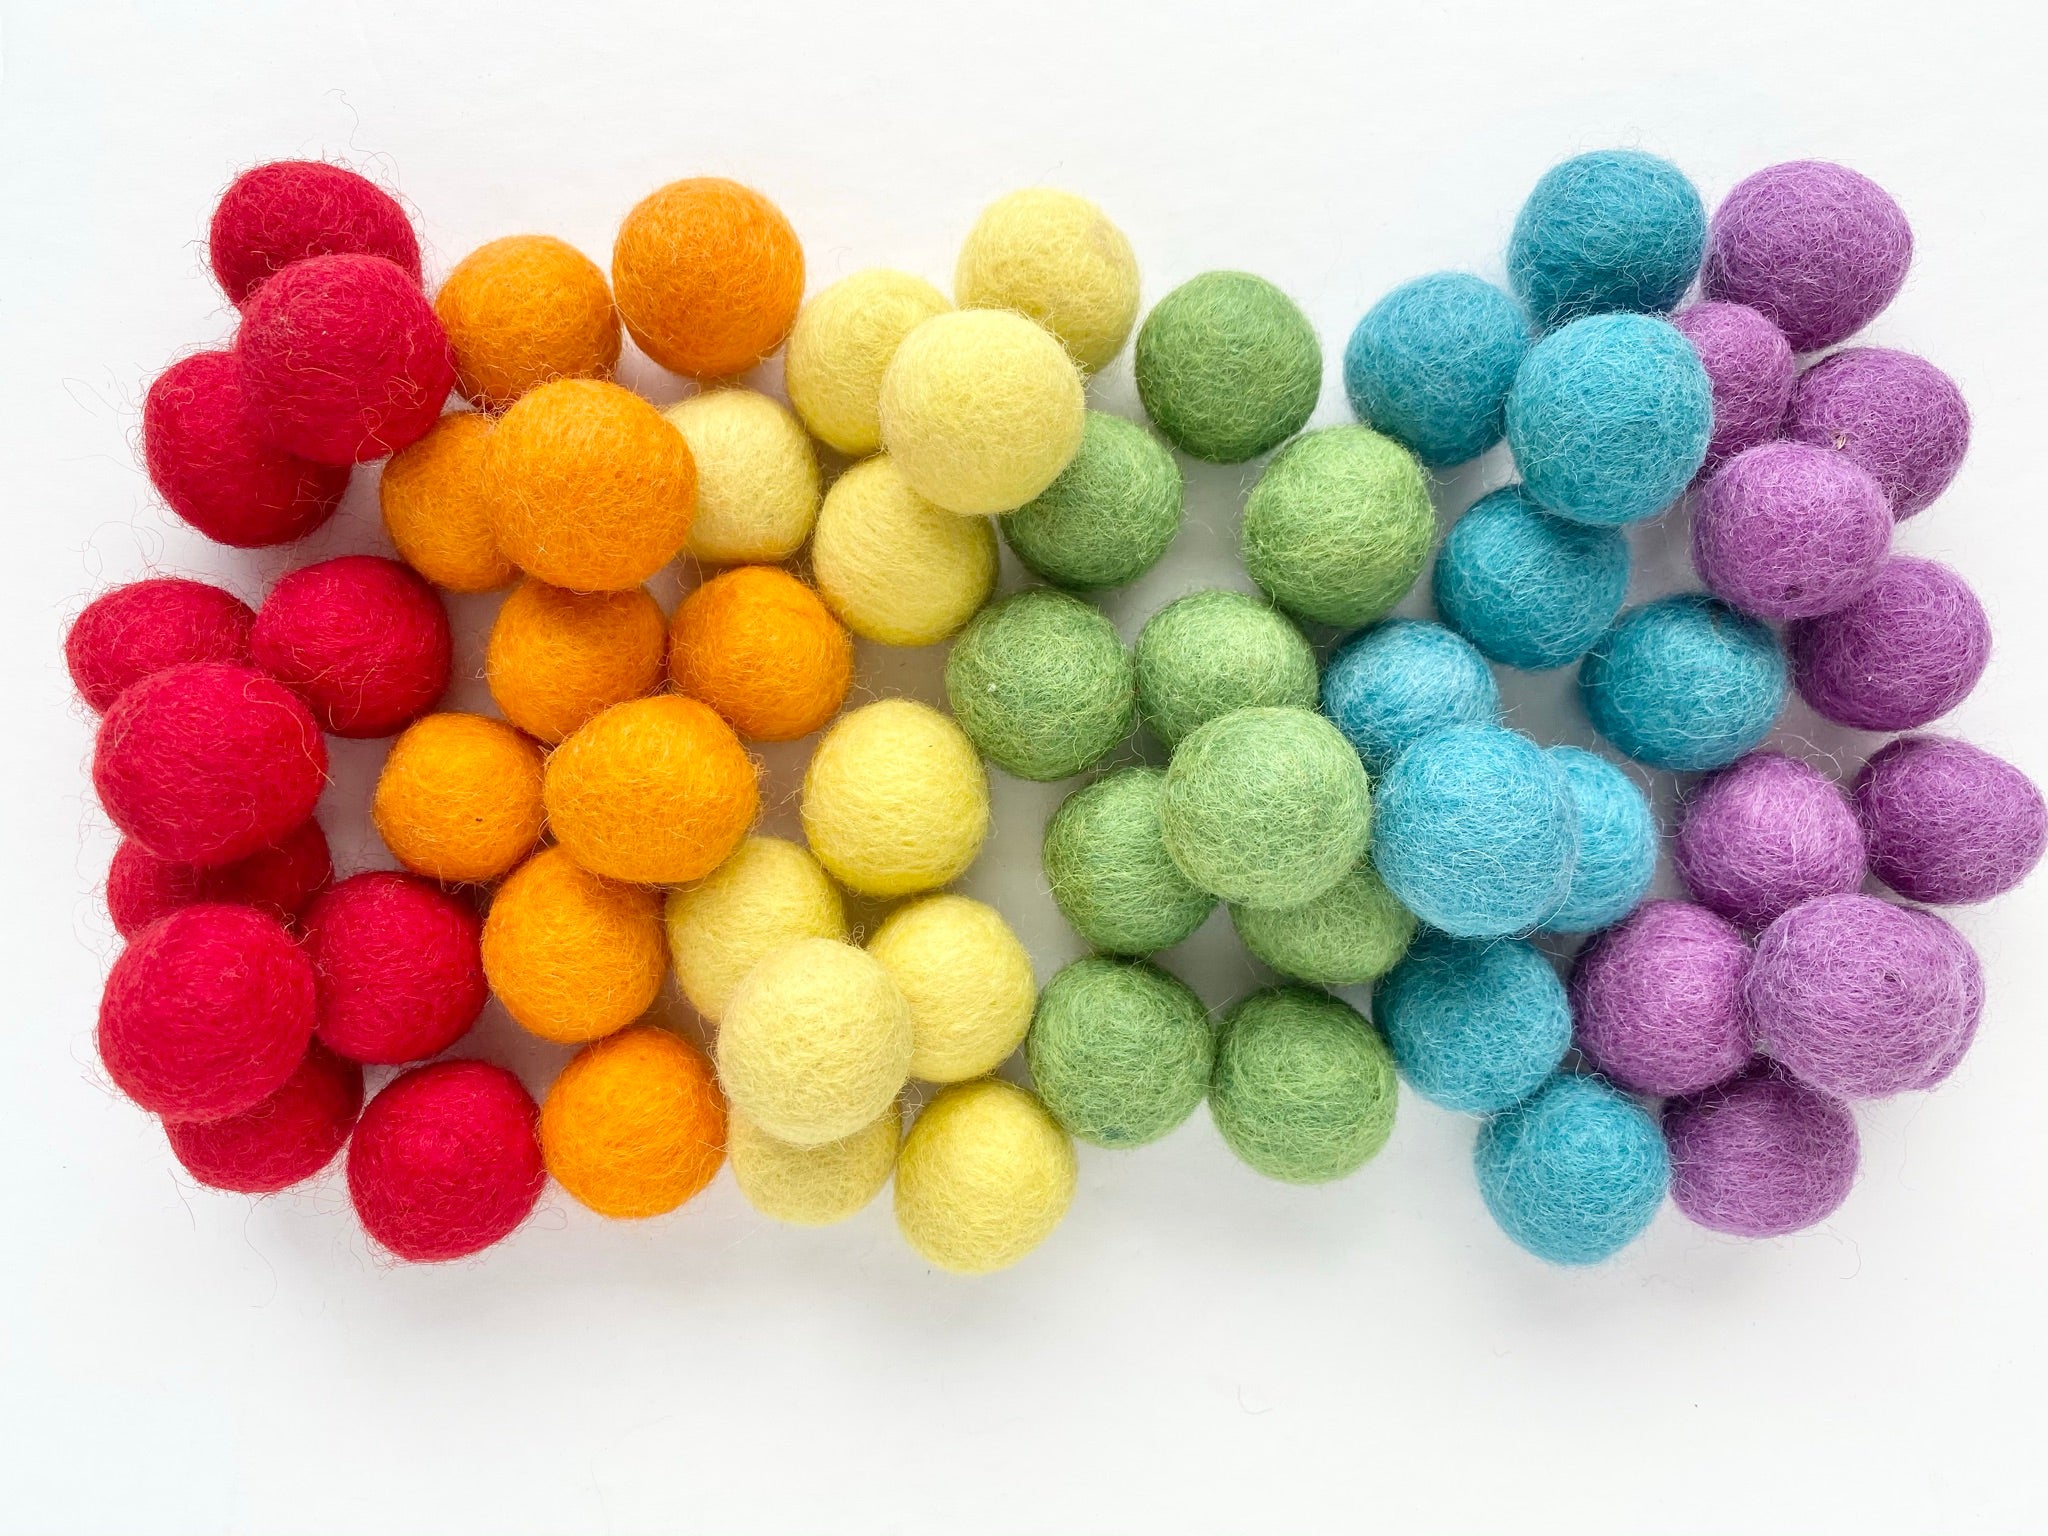 Handmade Wool Felt Balls, 3cm Diameter, Jewel Tone Rainbow Colors, Set of 36